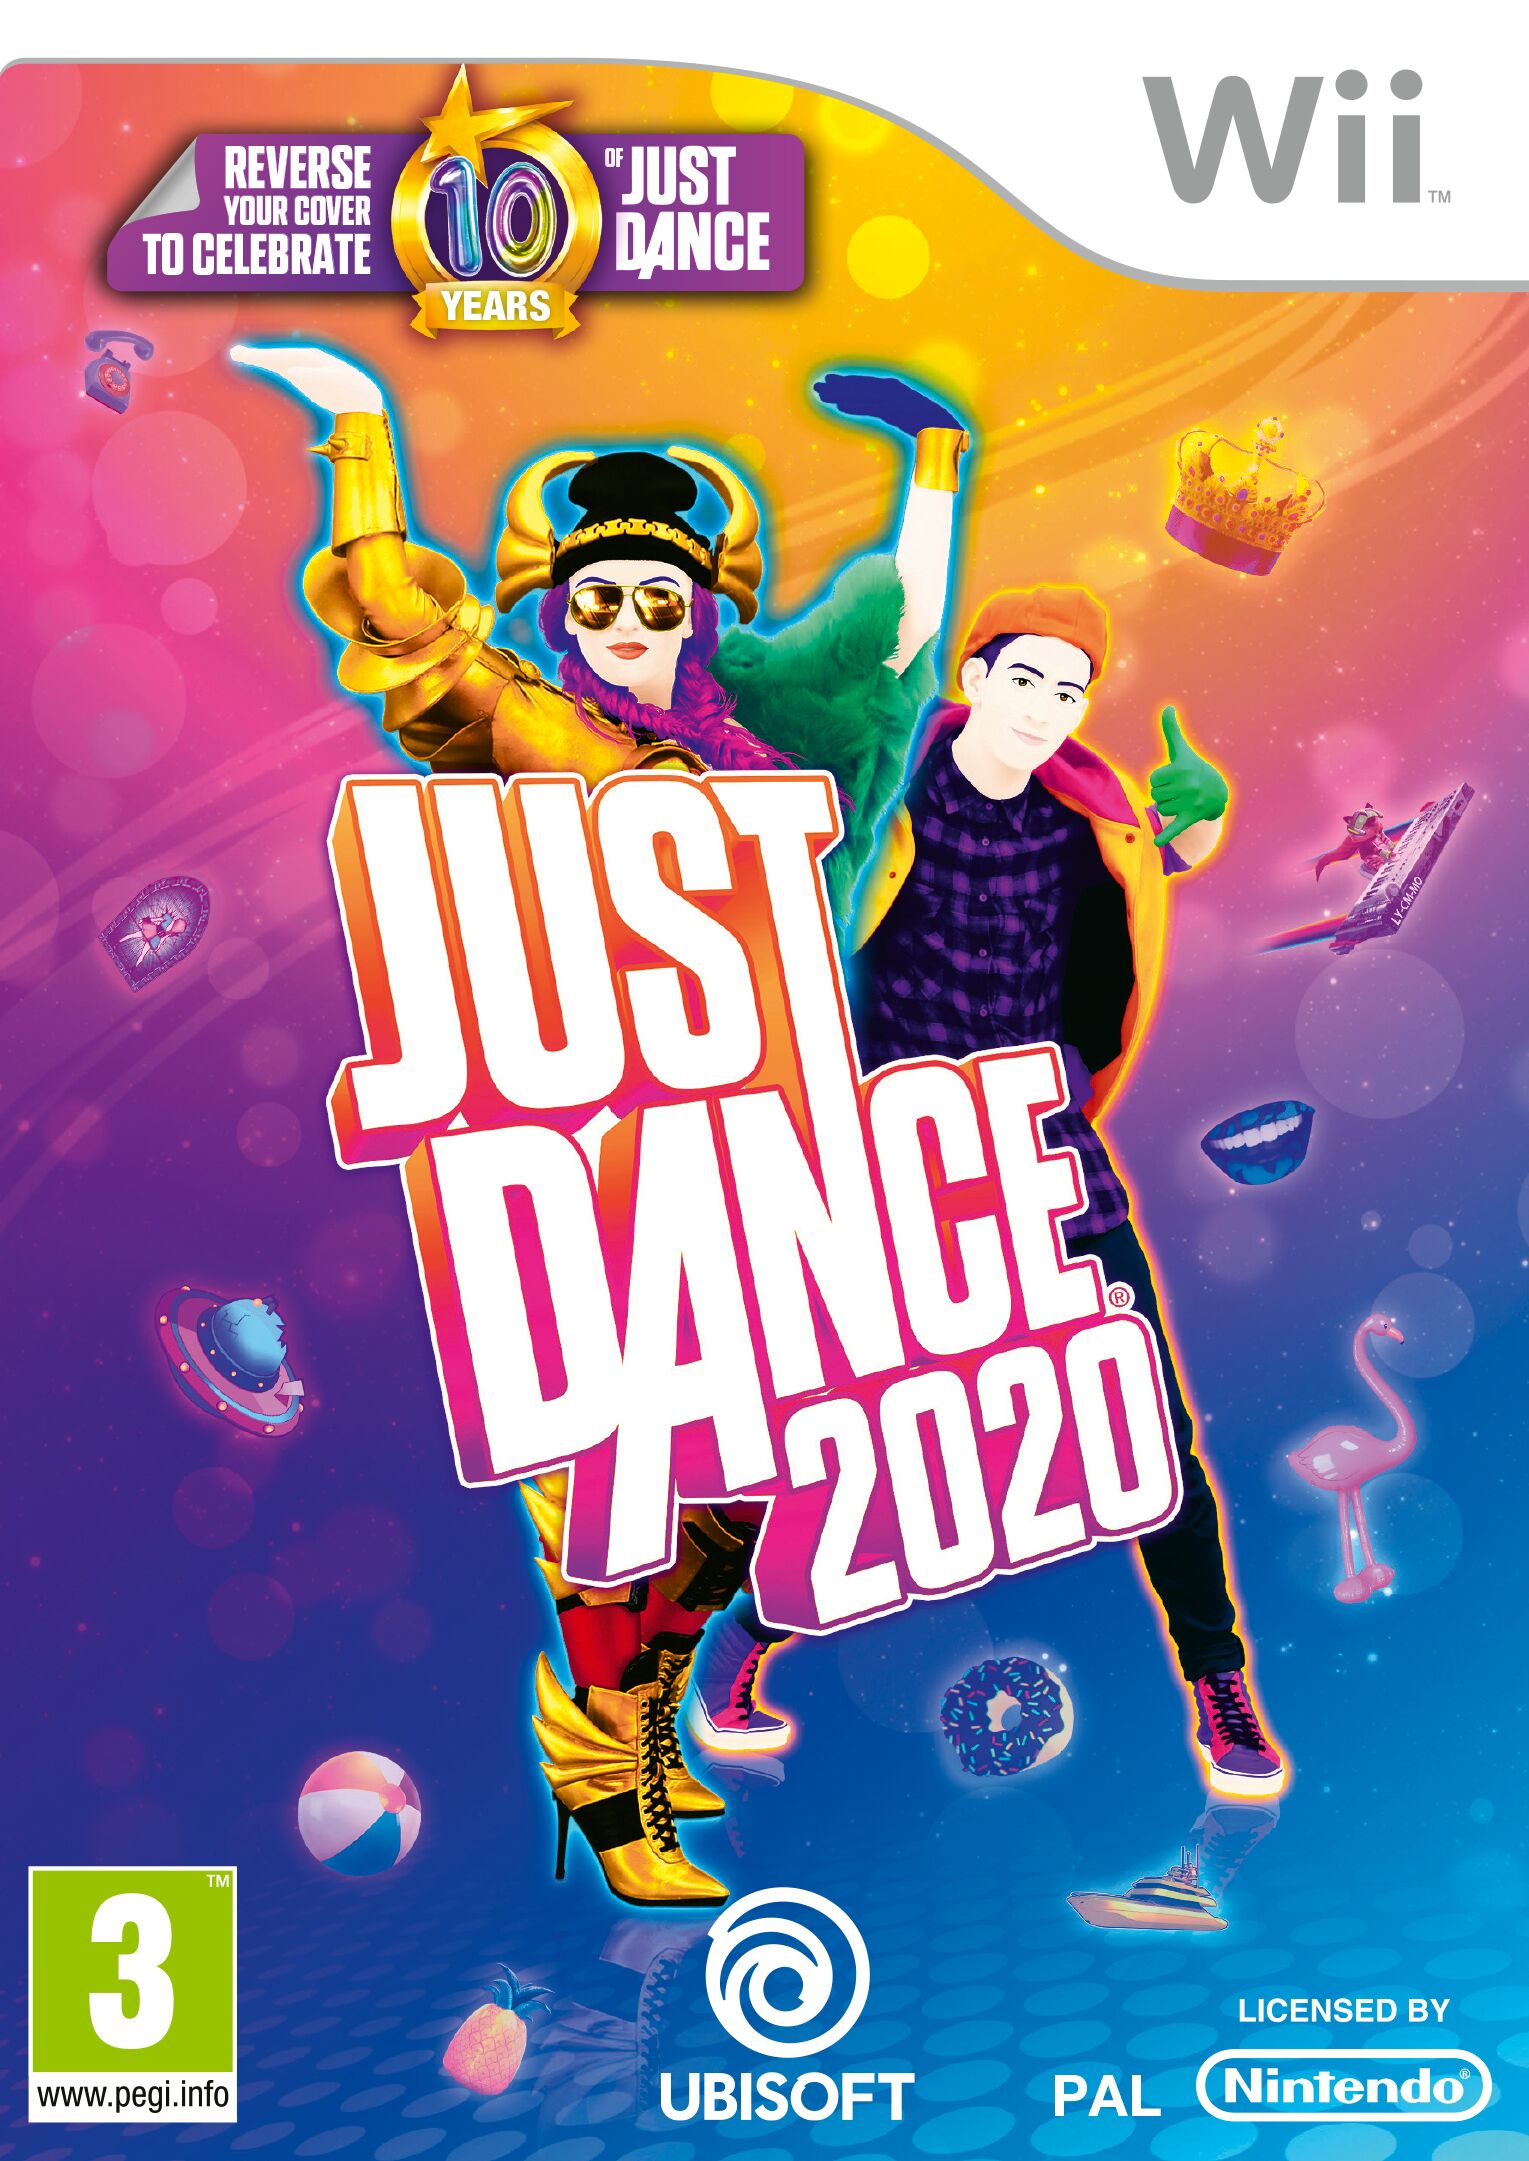 just dance 2020 wii release date